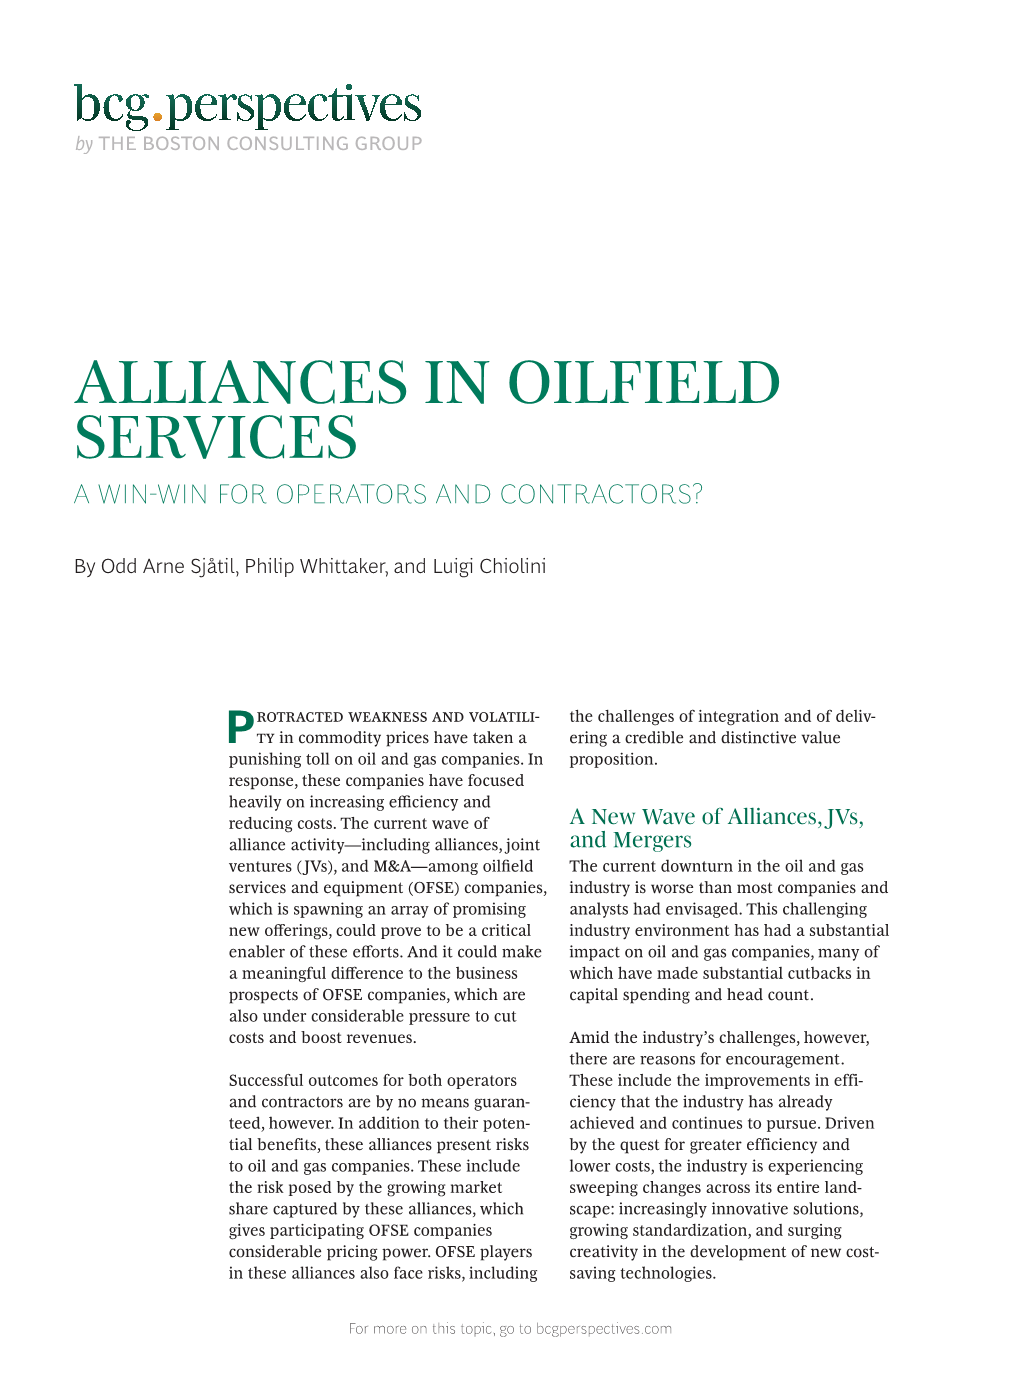 Alliances in Oilfield Services a Win-Win for Operators and Contractors?